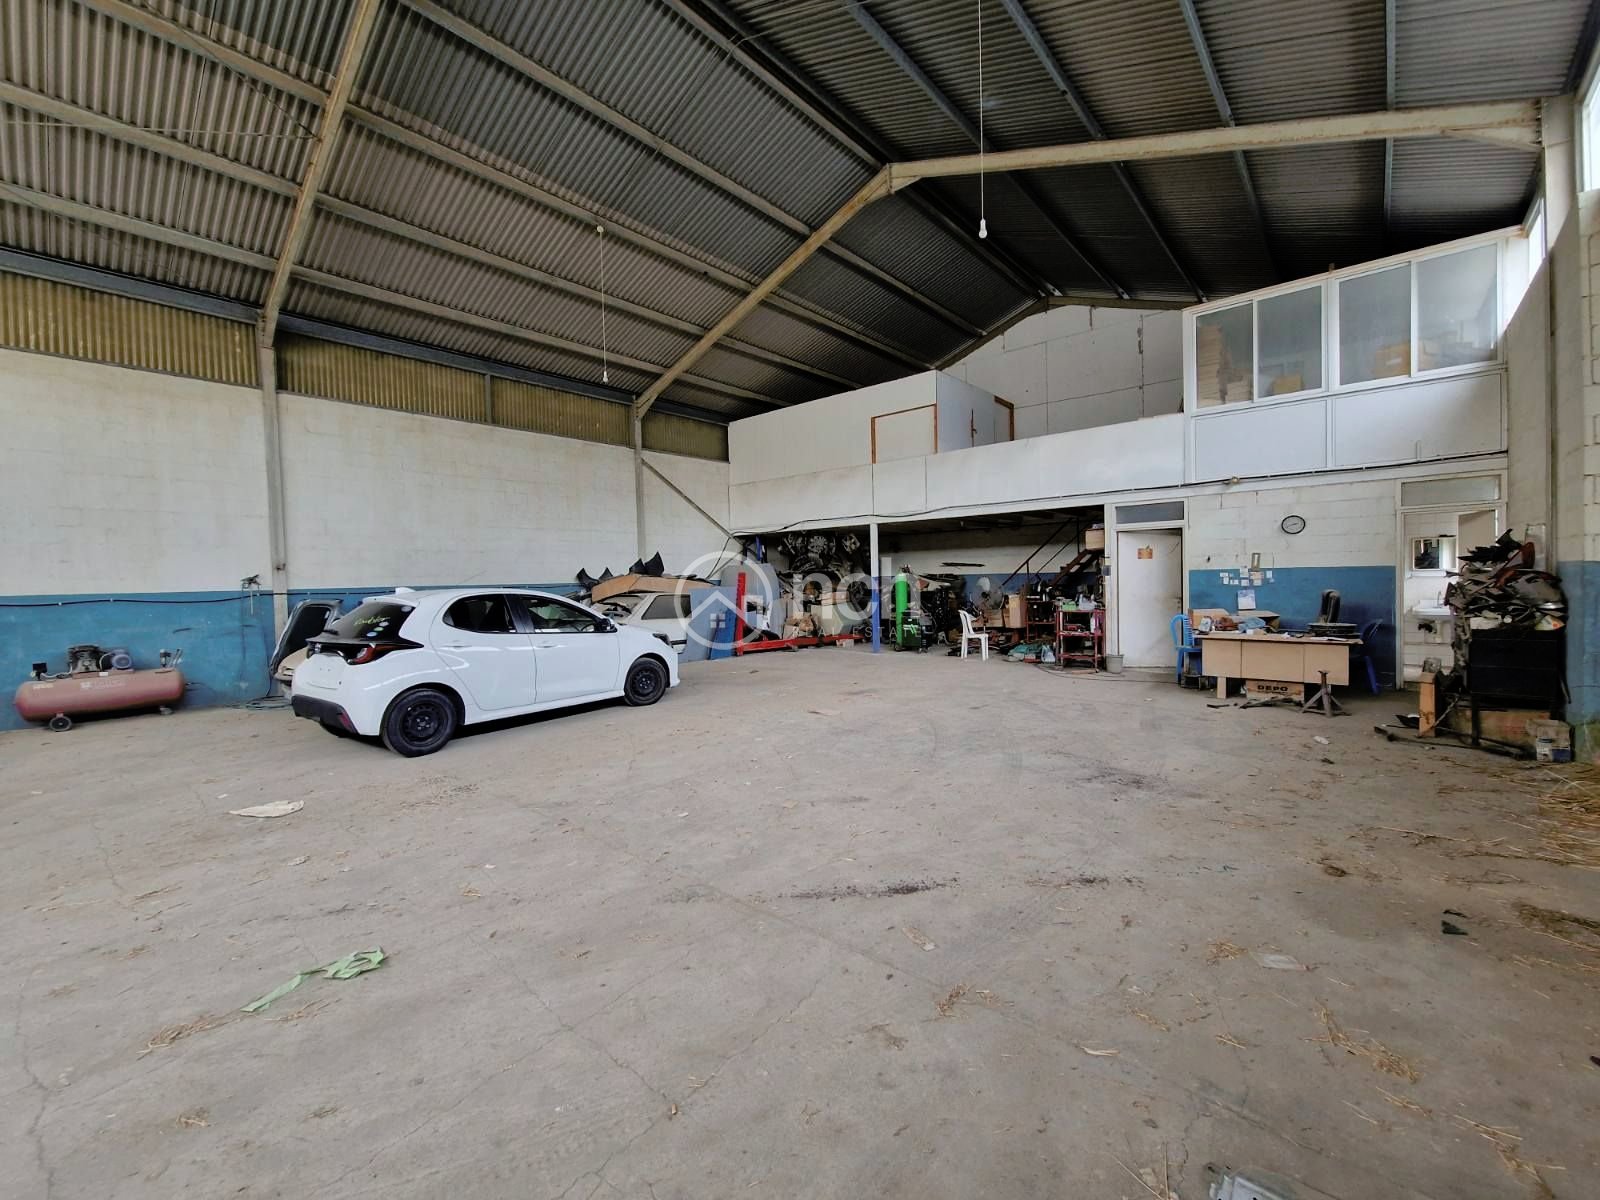 260m² Warehouse for Rent in Lakatamia, Nicosia District